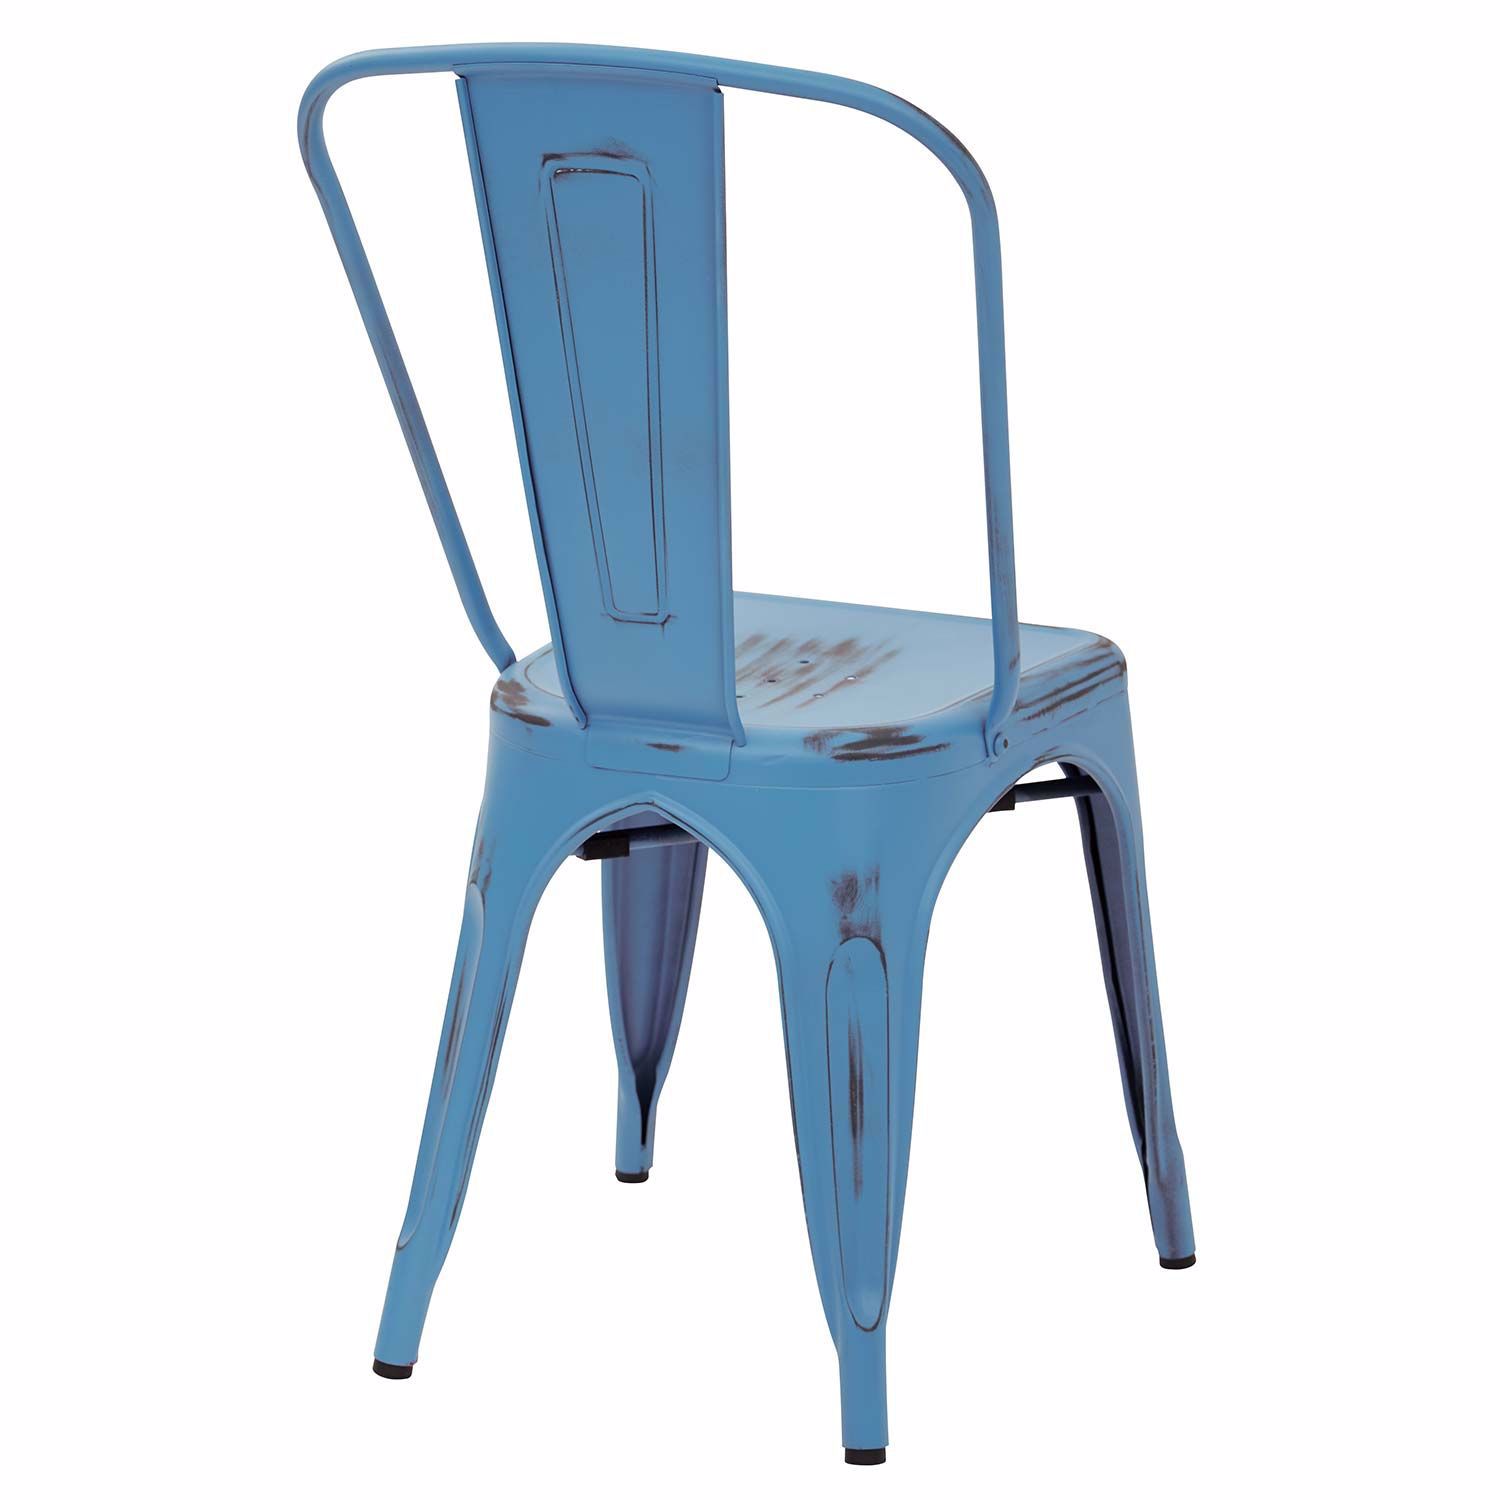 Bristow Blue Armless Chair 4 Pack D Brw29a4 Arb Osp Office